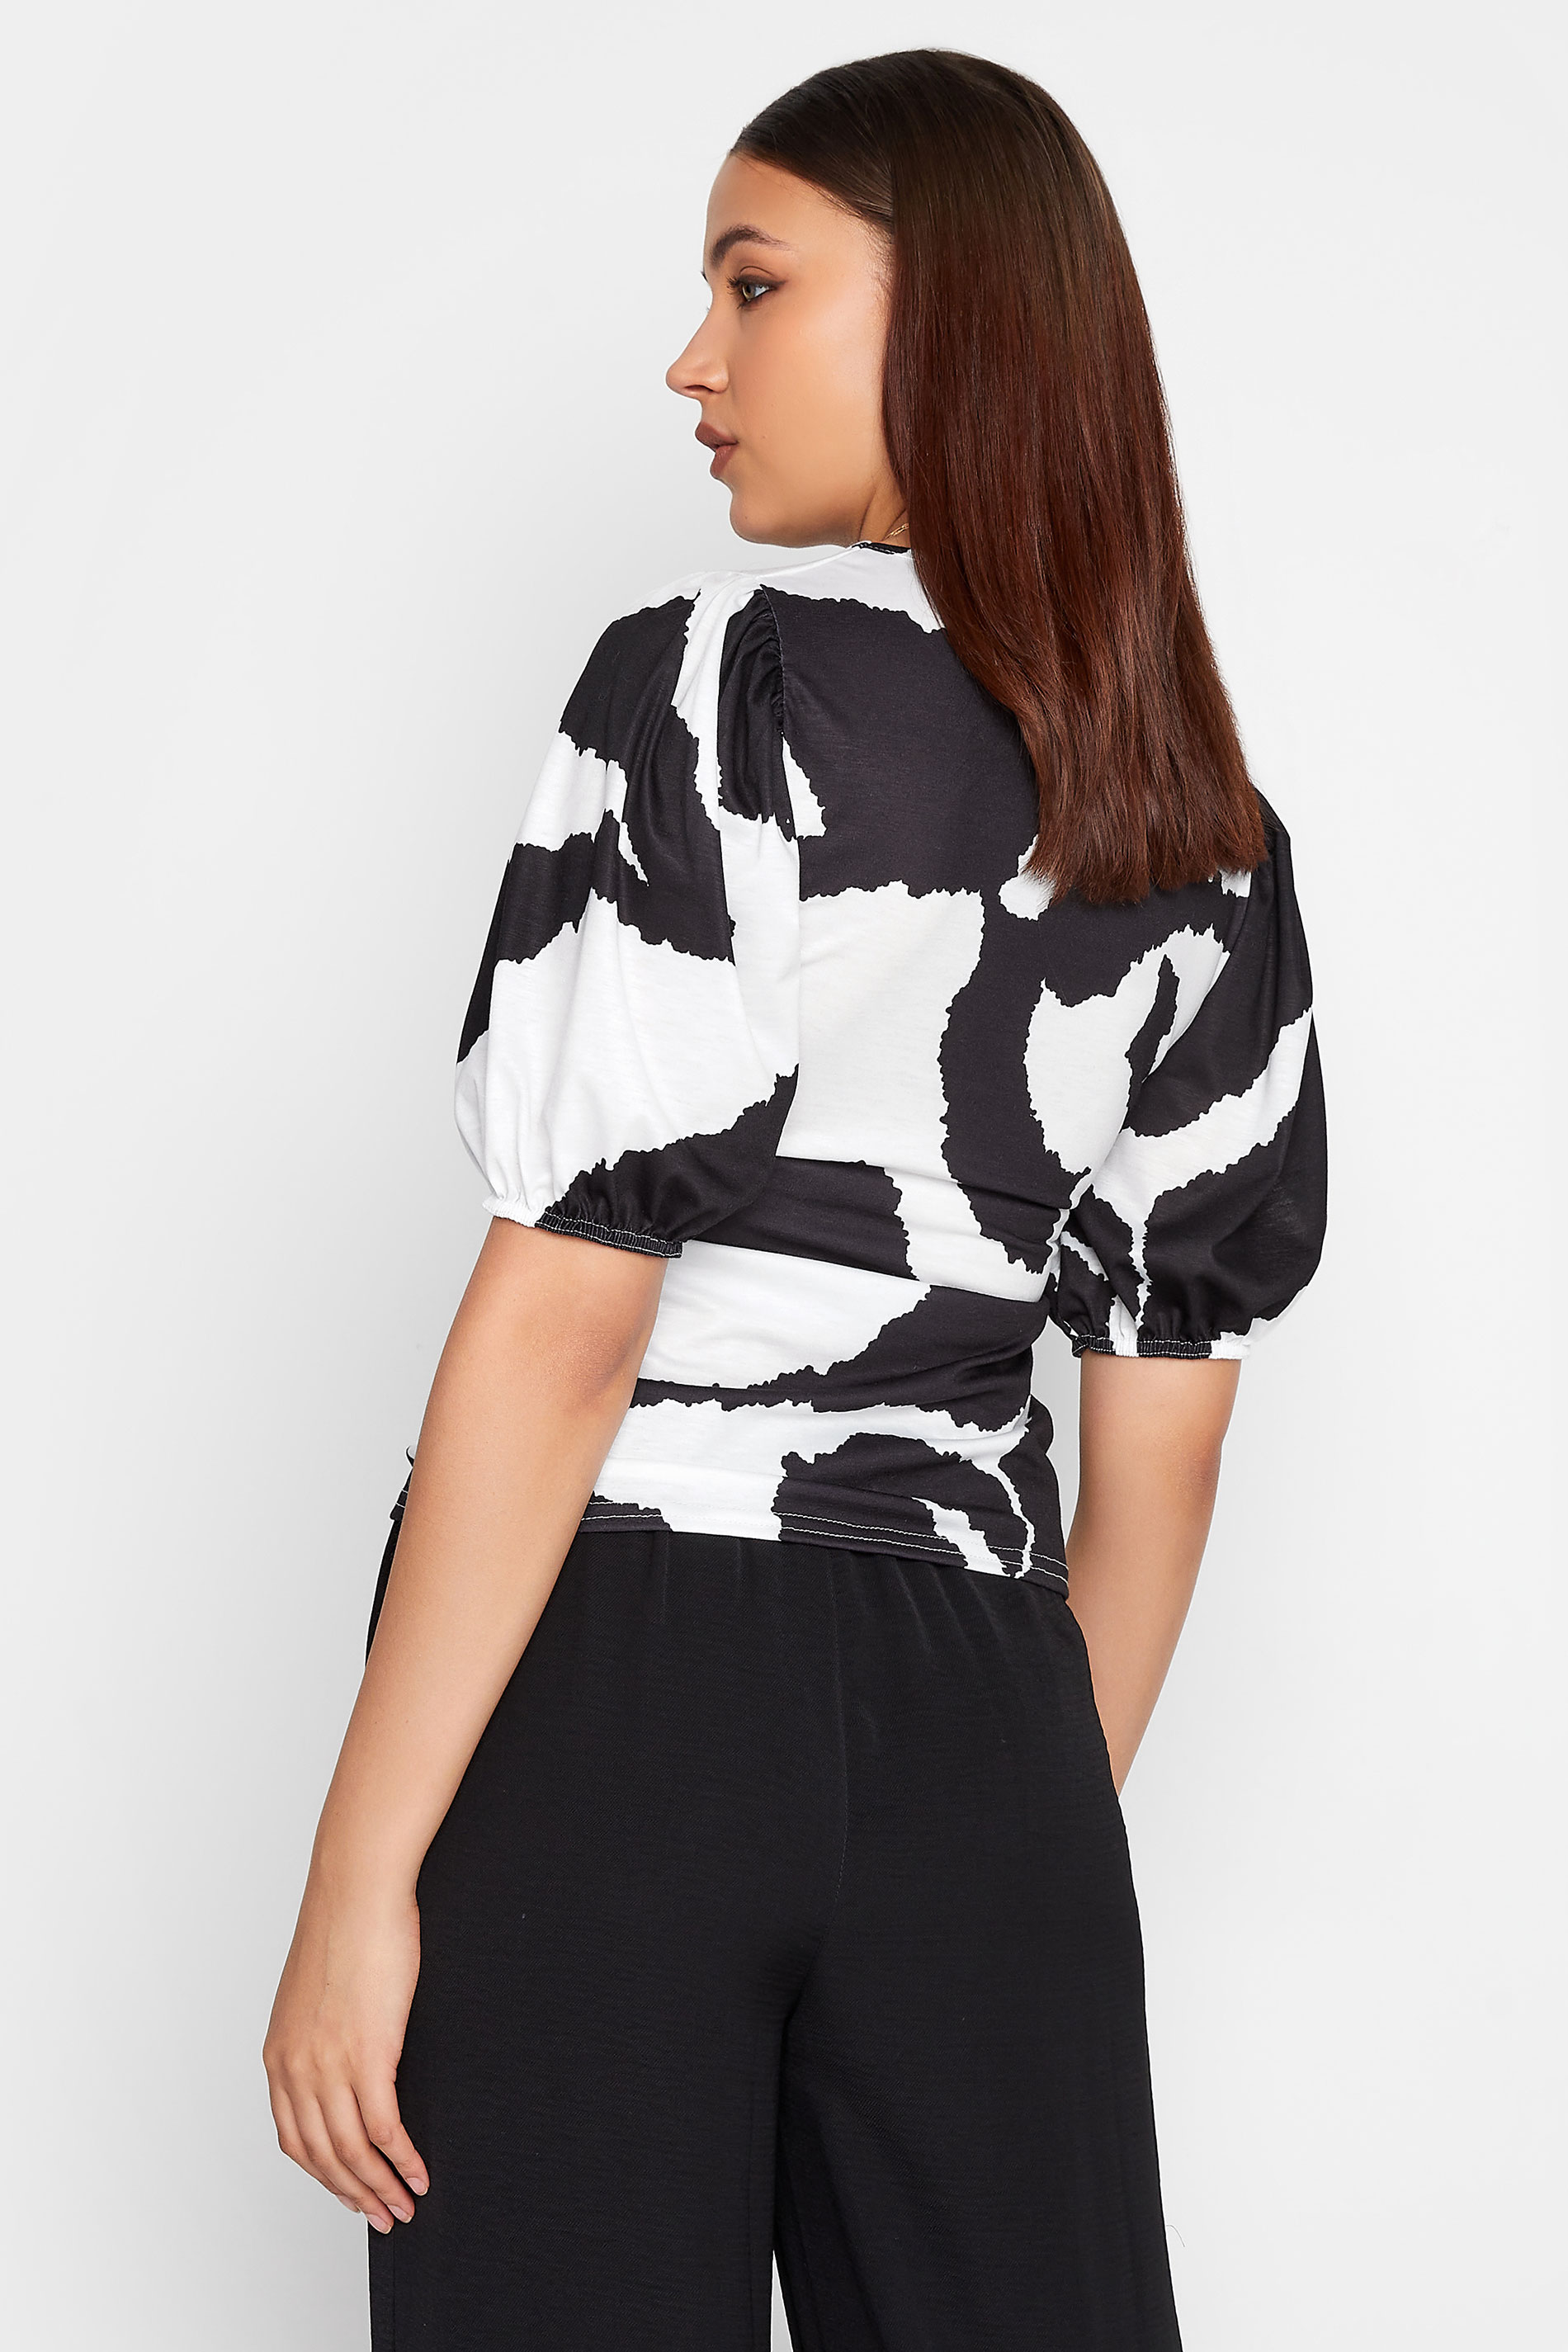 LTS Tall Women's Black Abstract Print Puff Sleeve Top | Long Tall Sally  3